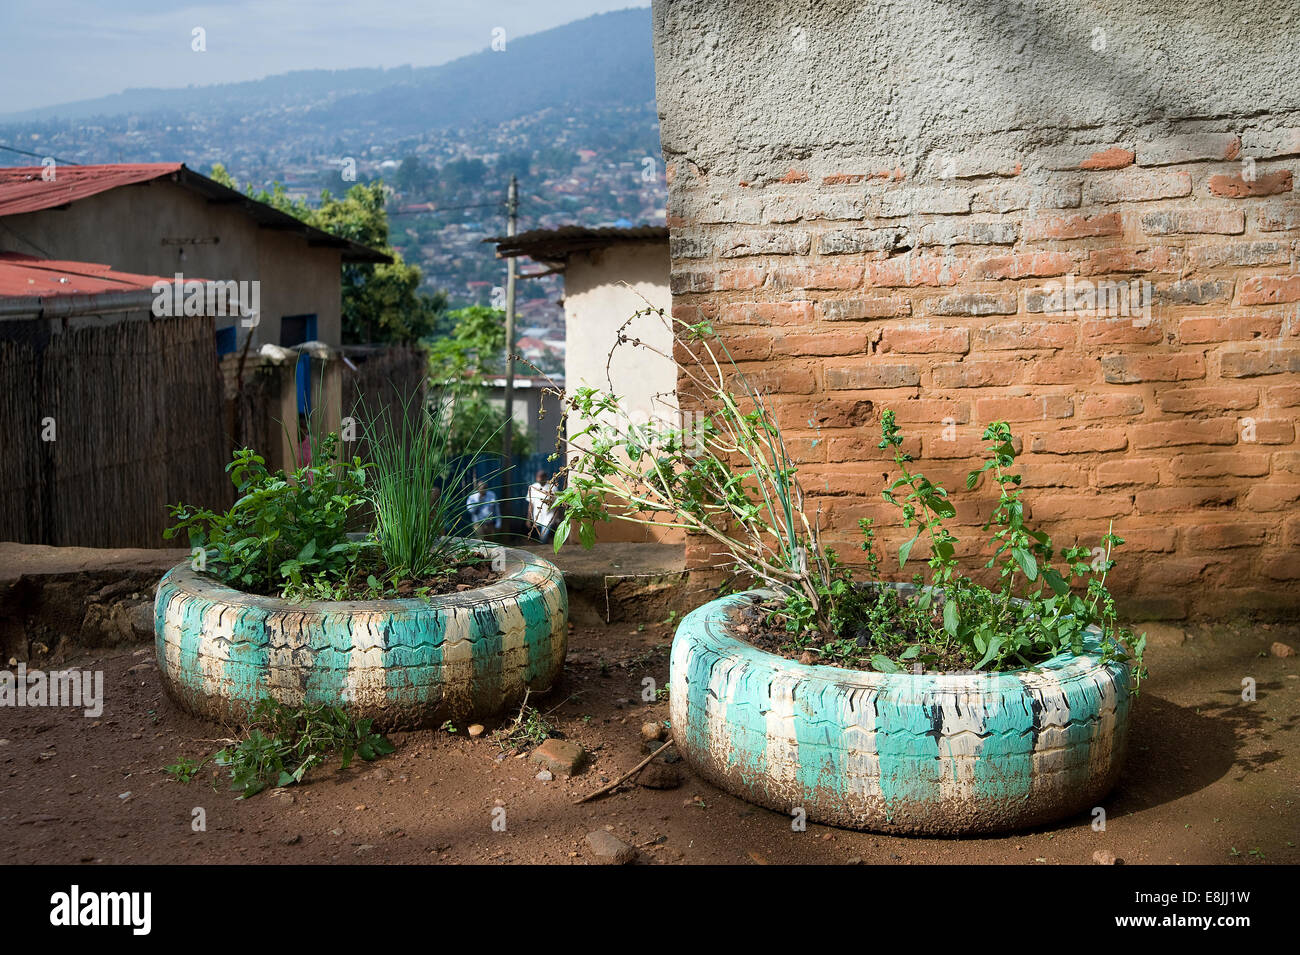 RWANDA, KIGALI: Street scenes in Rwanda's capital. People, neighbourhoods, shops, hills. Photo by Claudia Wiens Stock Photo